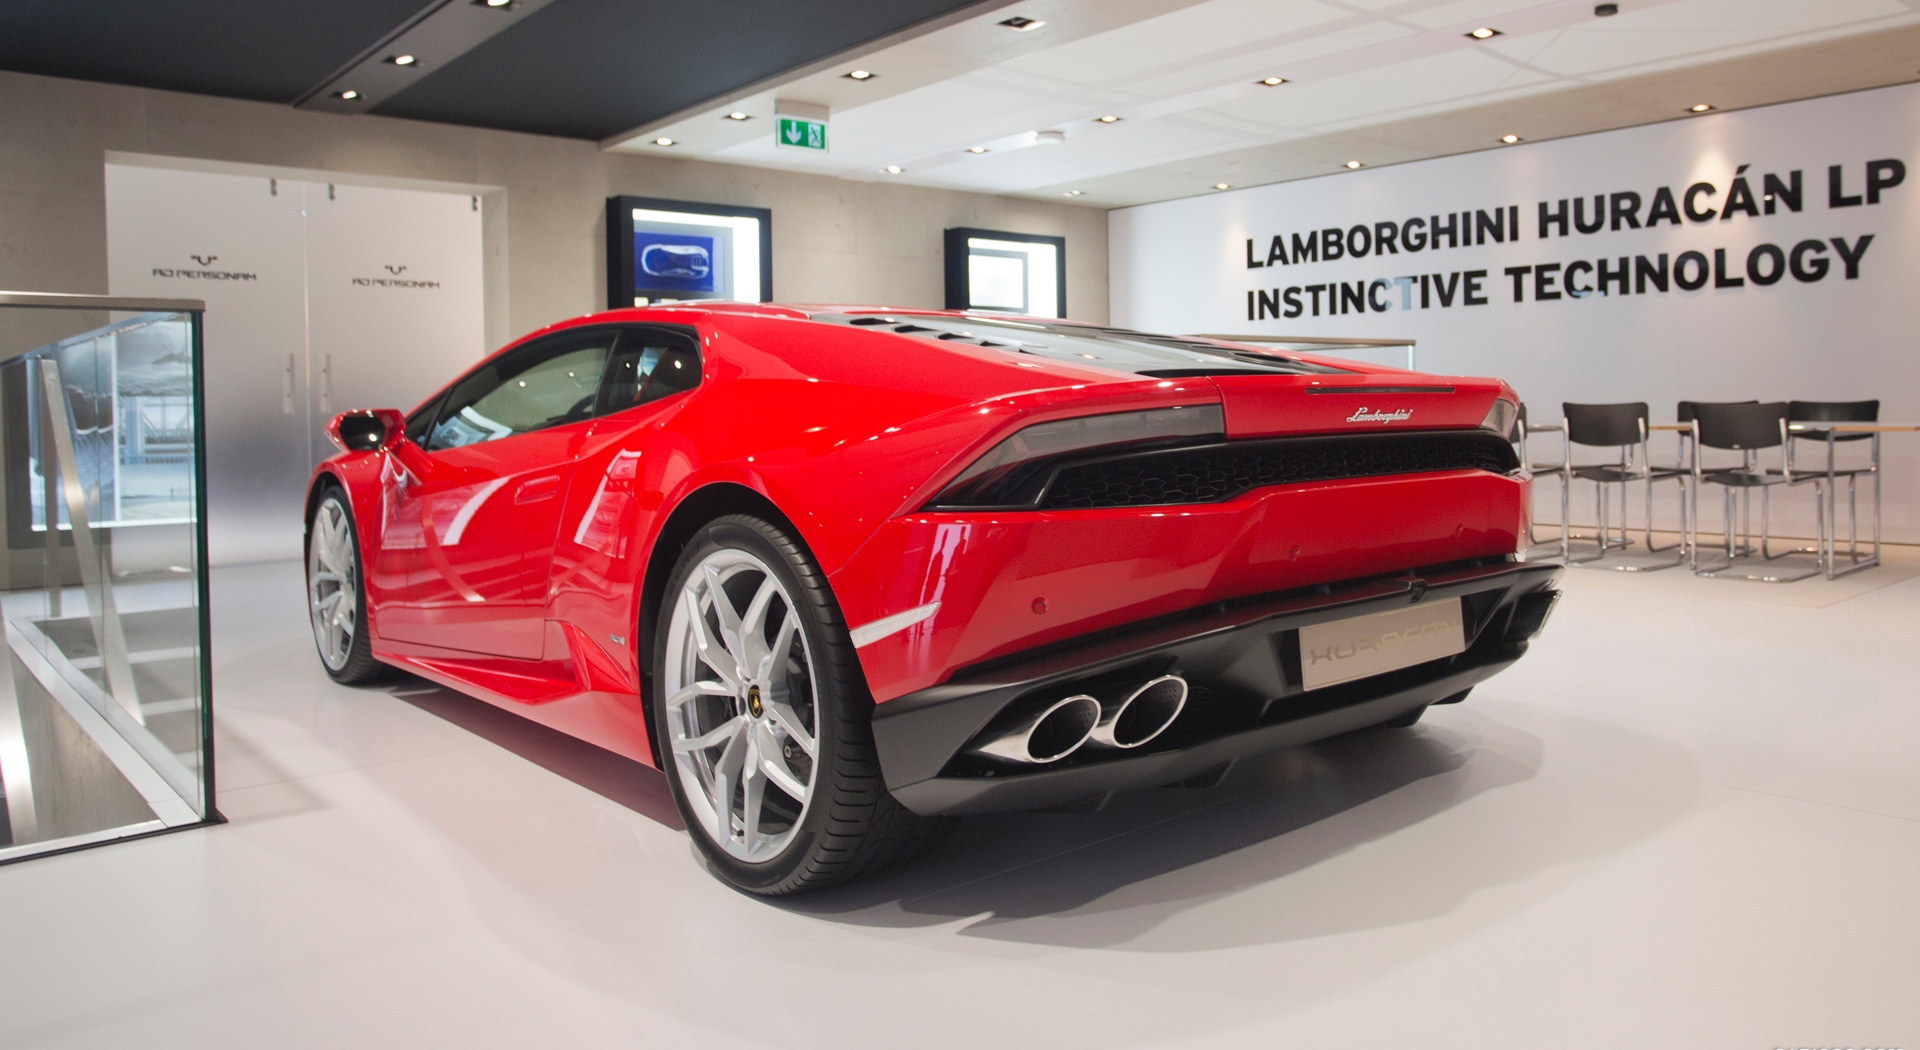 Lamborghini Huracan red